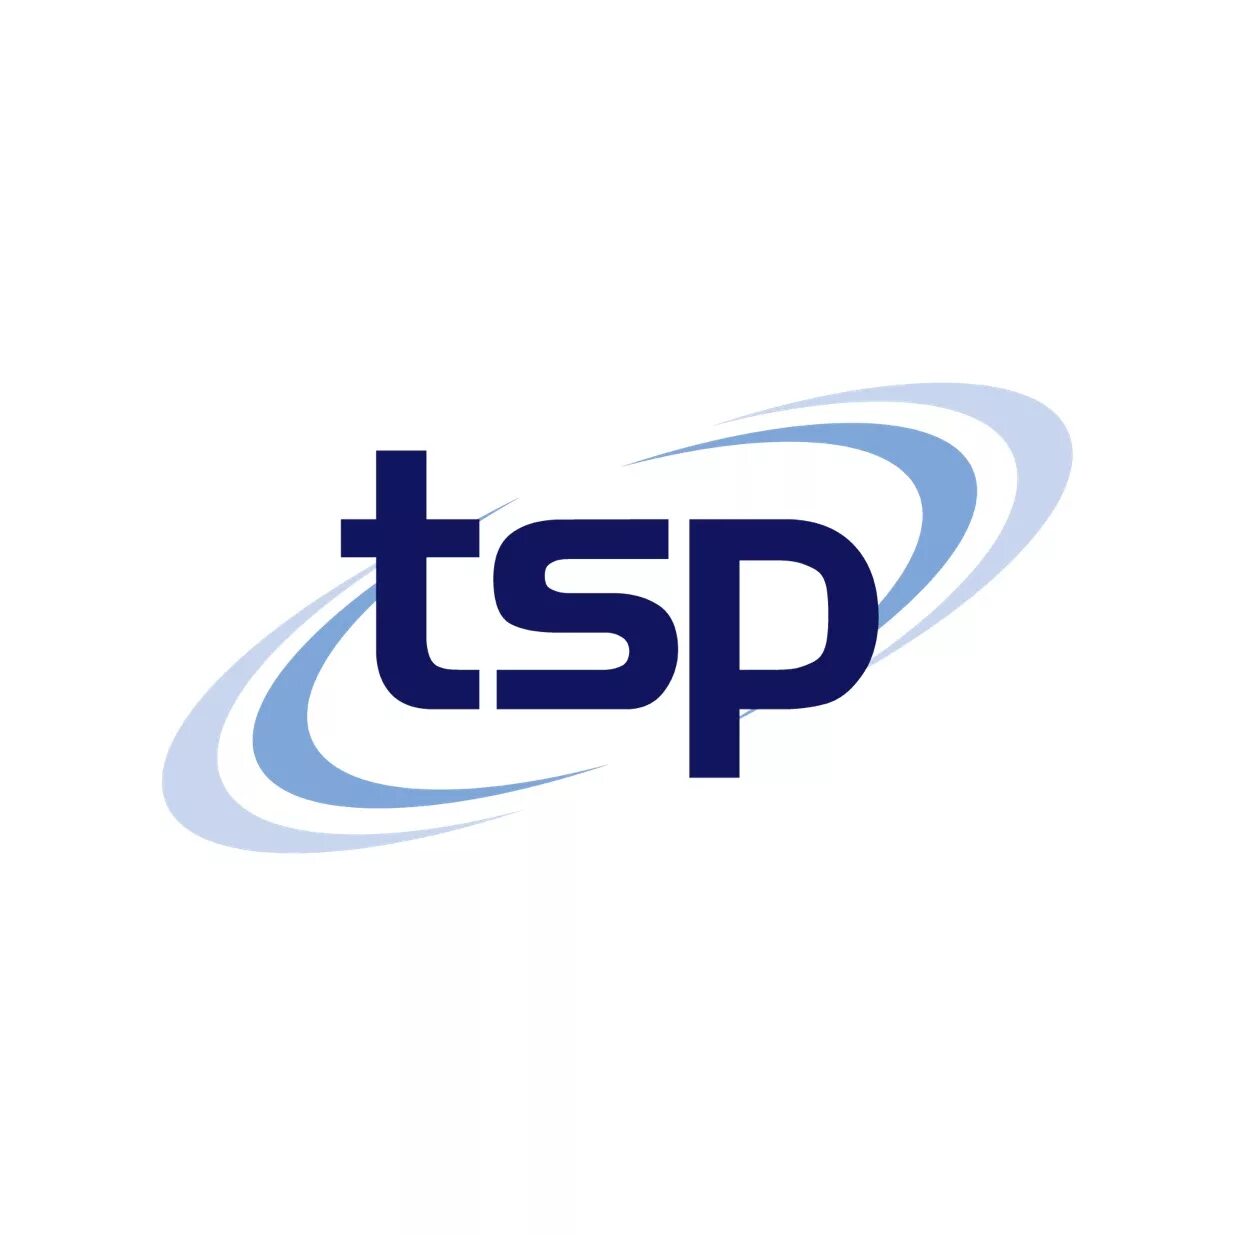 Tsp client 2.0. Tsp. Tsp лого. Технология tsp. Tsp2014.